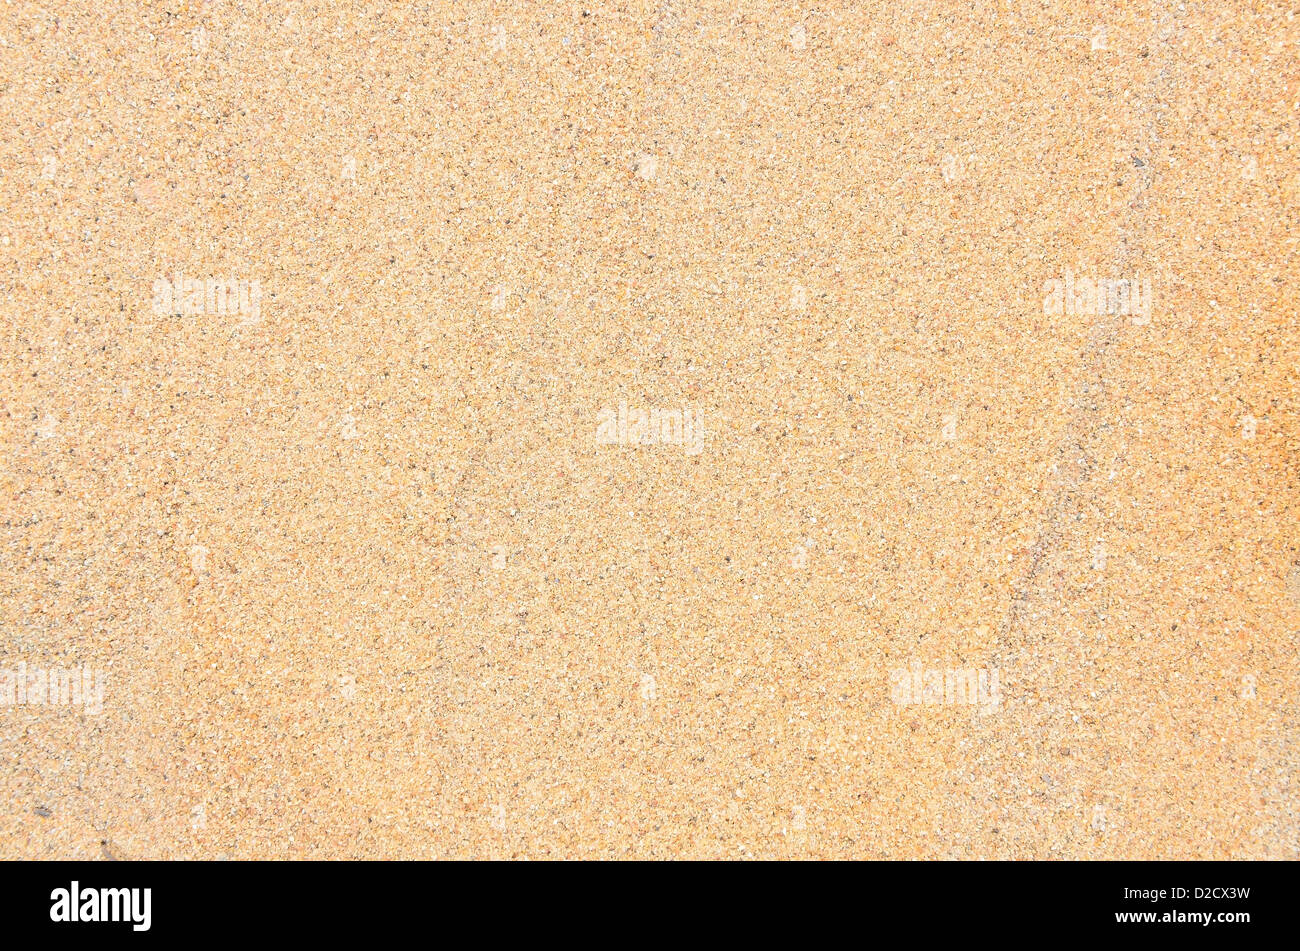 Fine grain sand background Stock Photo